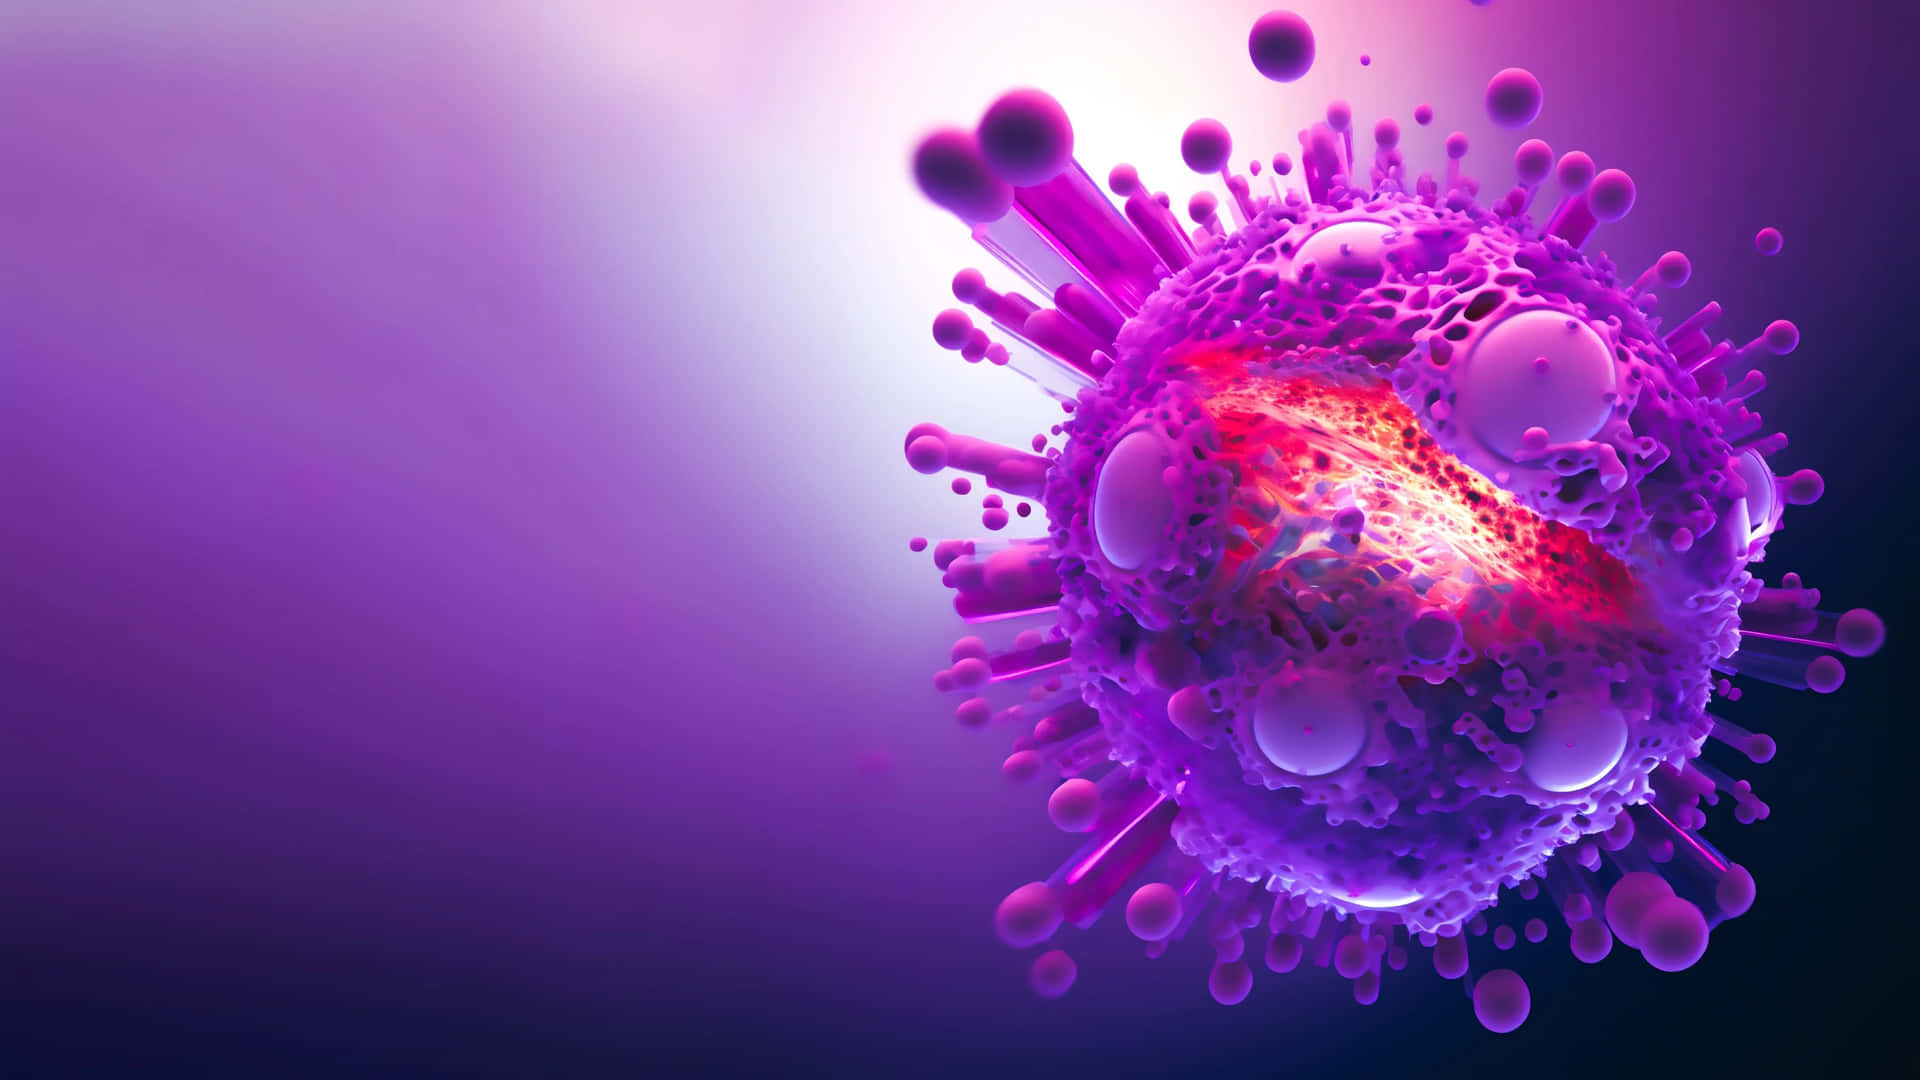 Vibrant Virus Particle Illustration Wallpaper